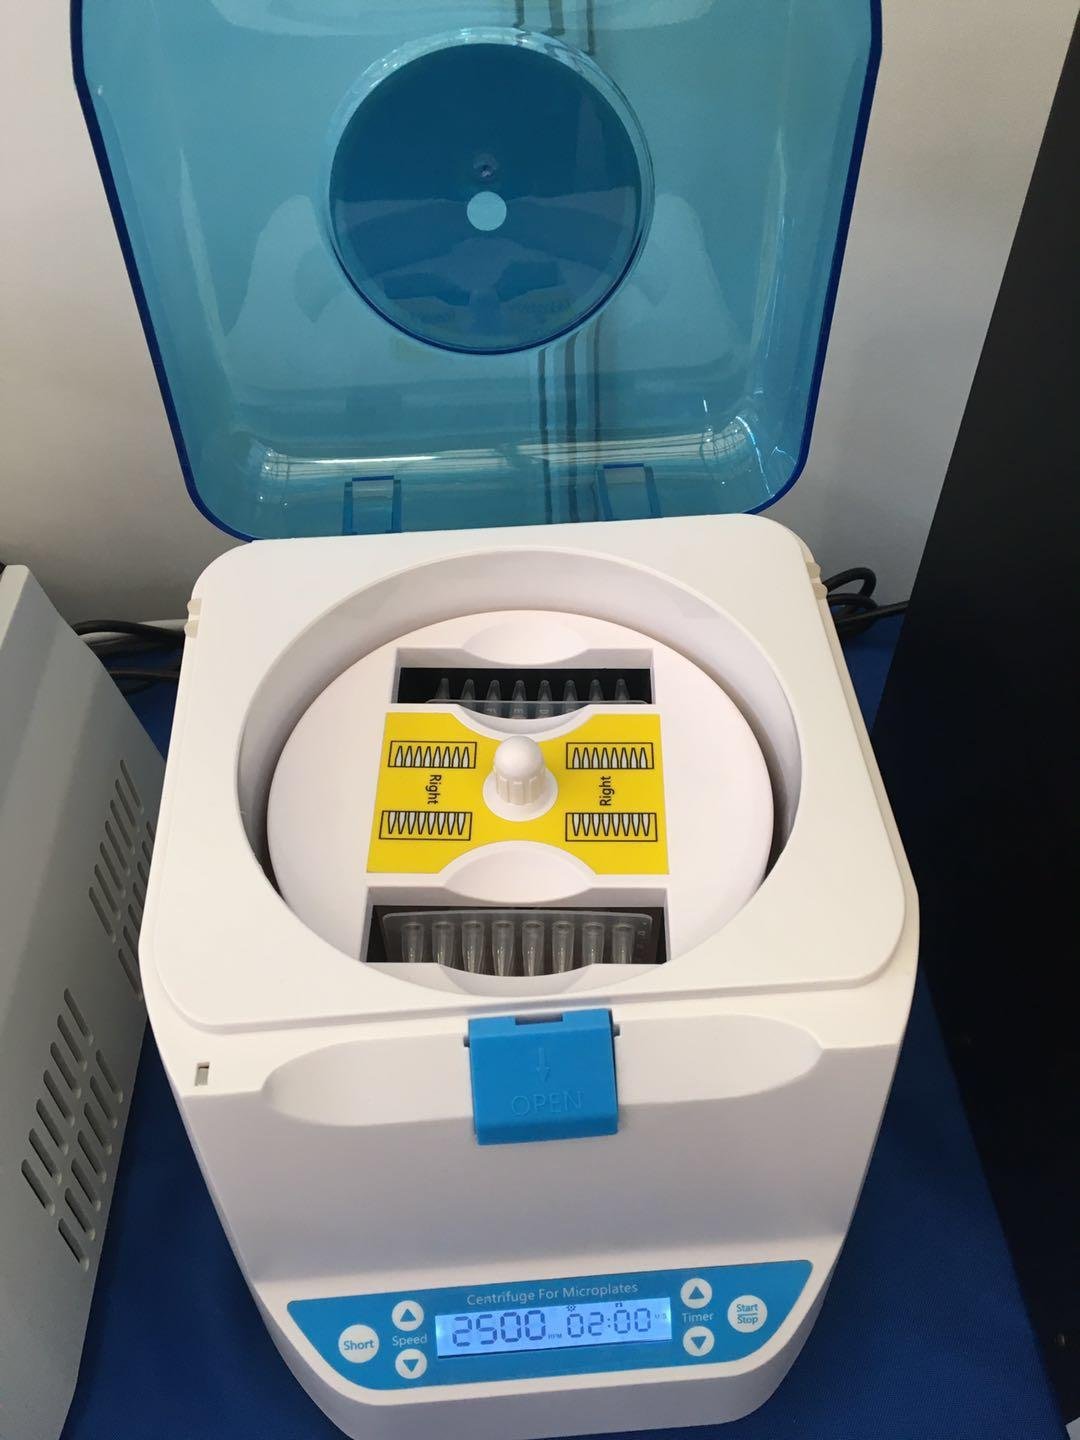 PCR Centrfiuge laboratory Mini 96 Well Micro Plate Medical Centfiuge Machine 2